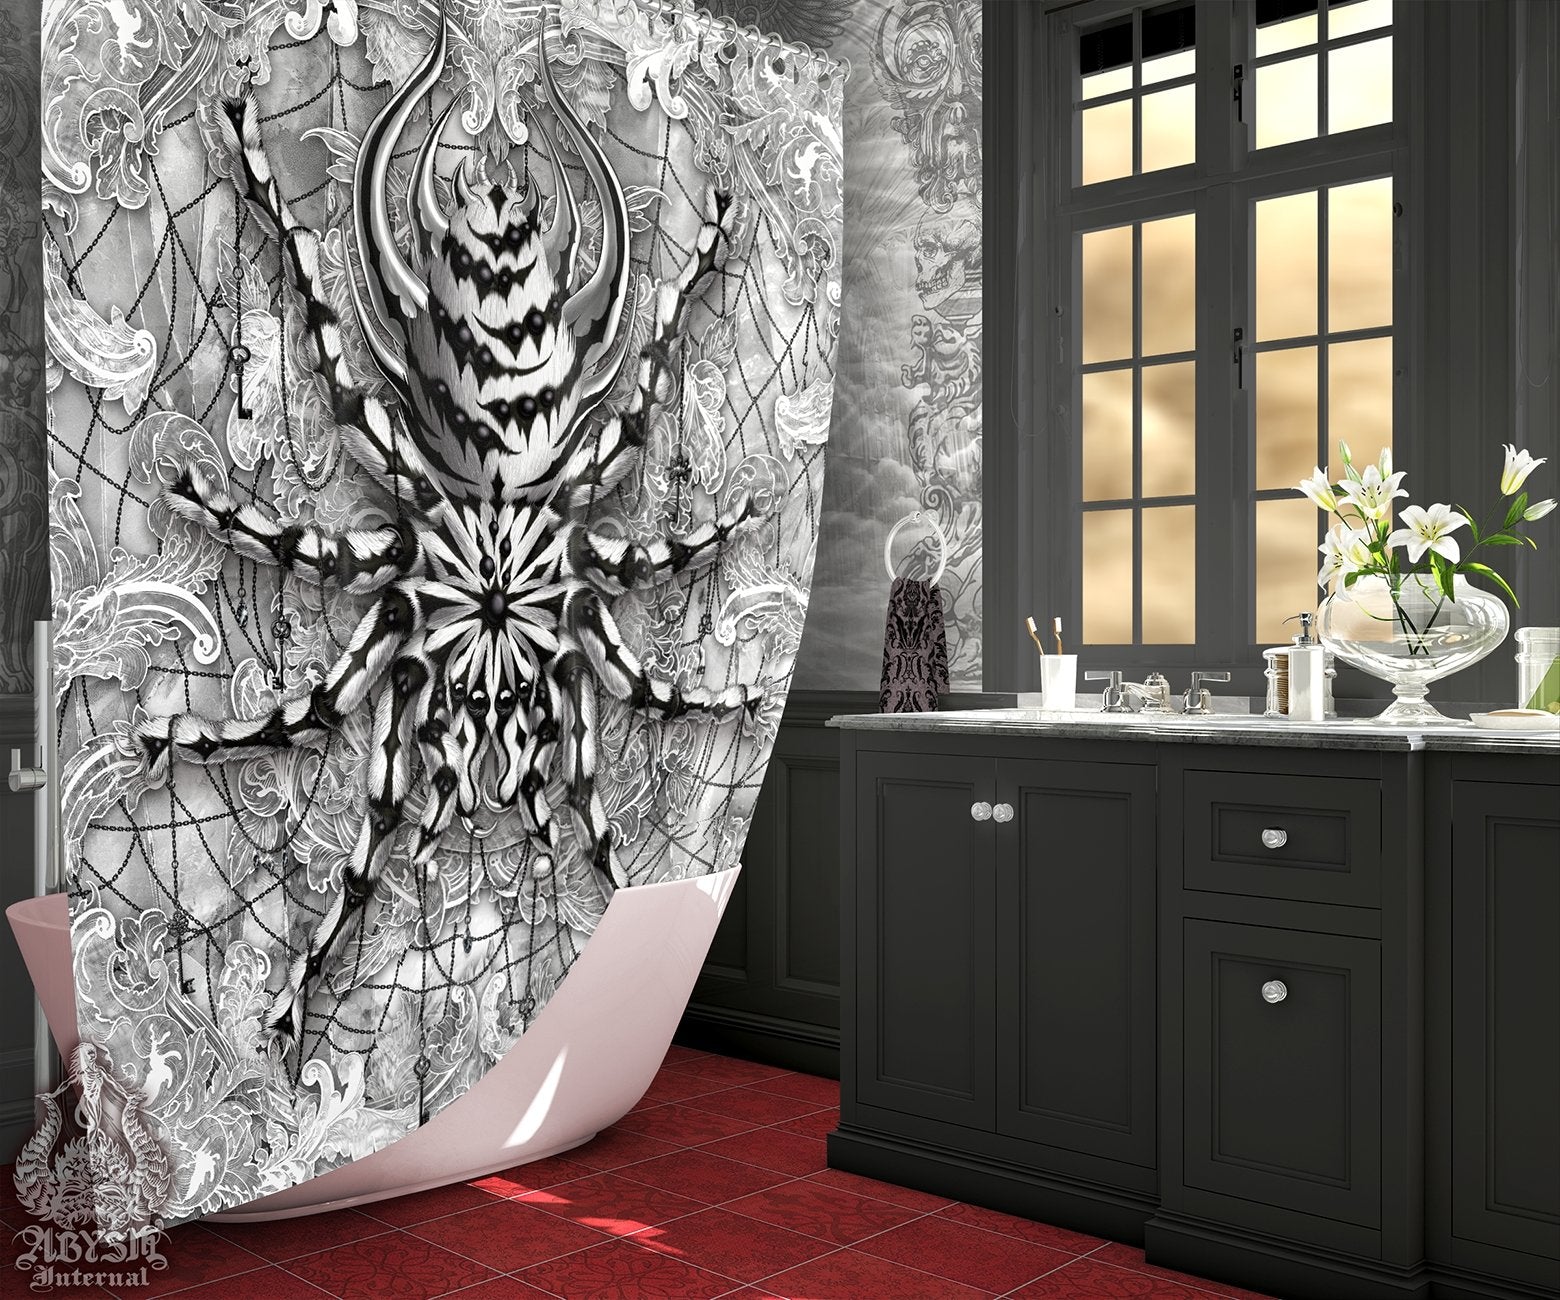 White Goth Shower Curtain, Gothic Bathroom Decor, Alternative Home - Spider, Stone, Black and White, Tarantula Art - Abysm Internal